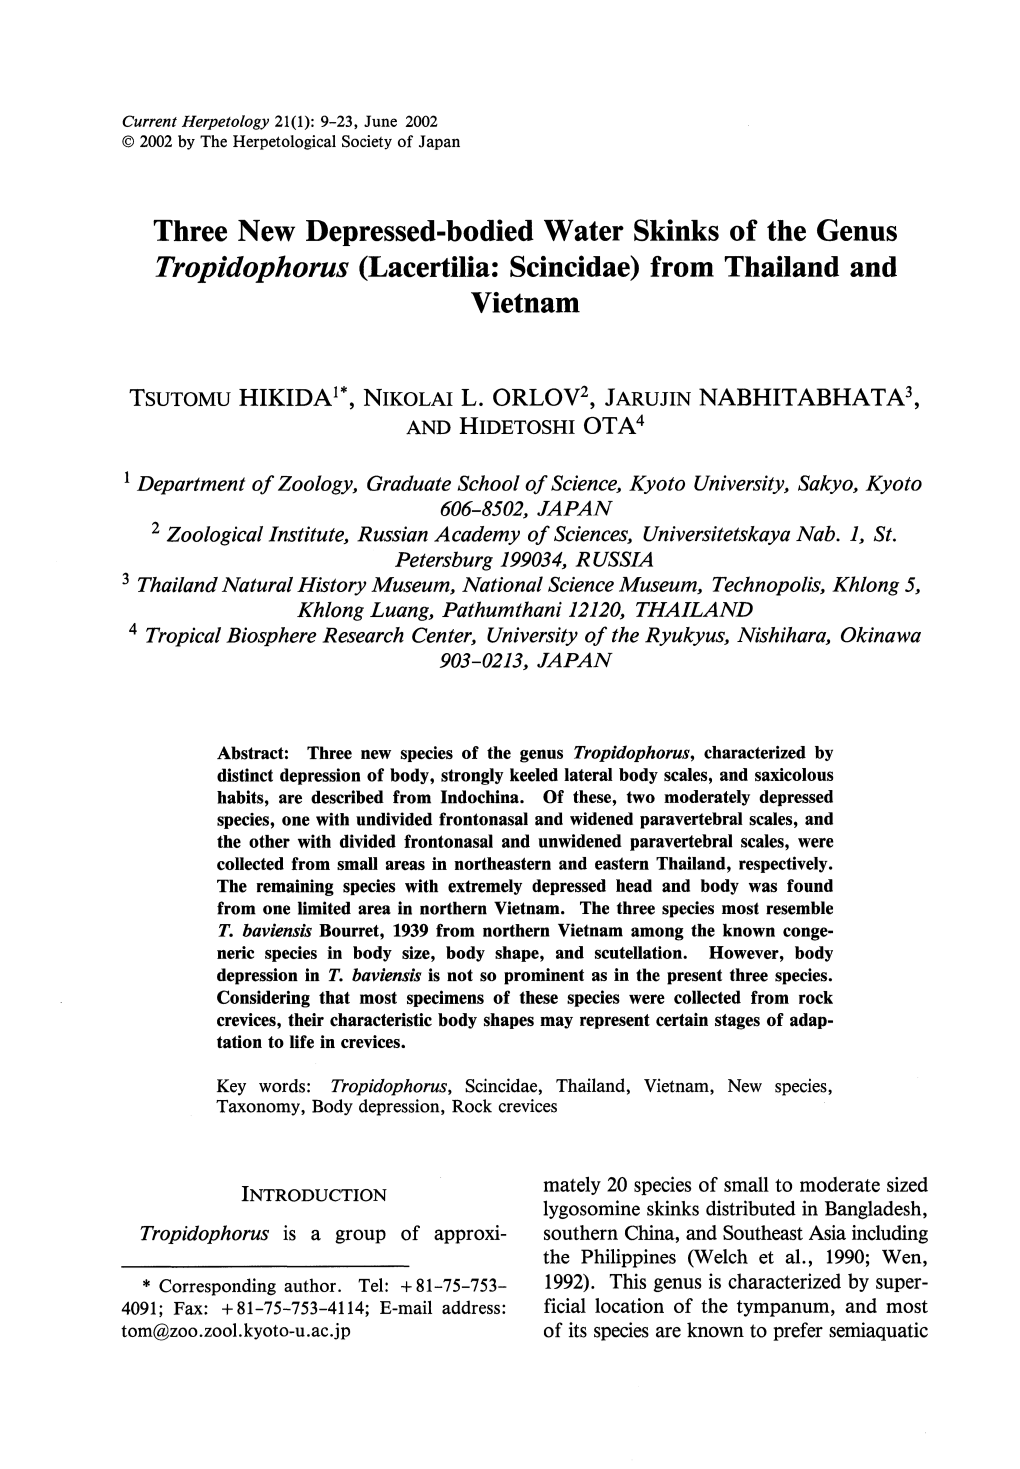 Three New Depressed-Bodied Water Skinks of the Genus Tropidophorus (Lacertilia: Scincidae) from Thailand and Vietnam